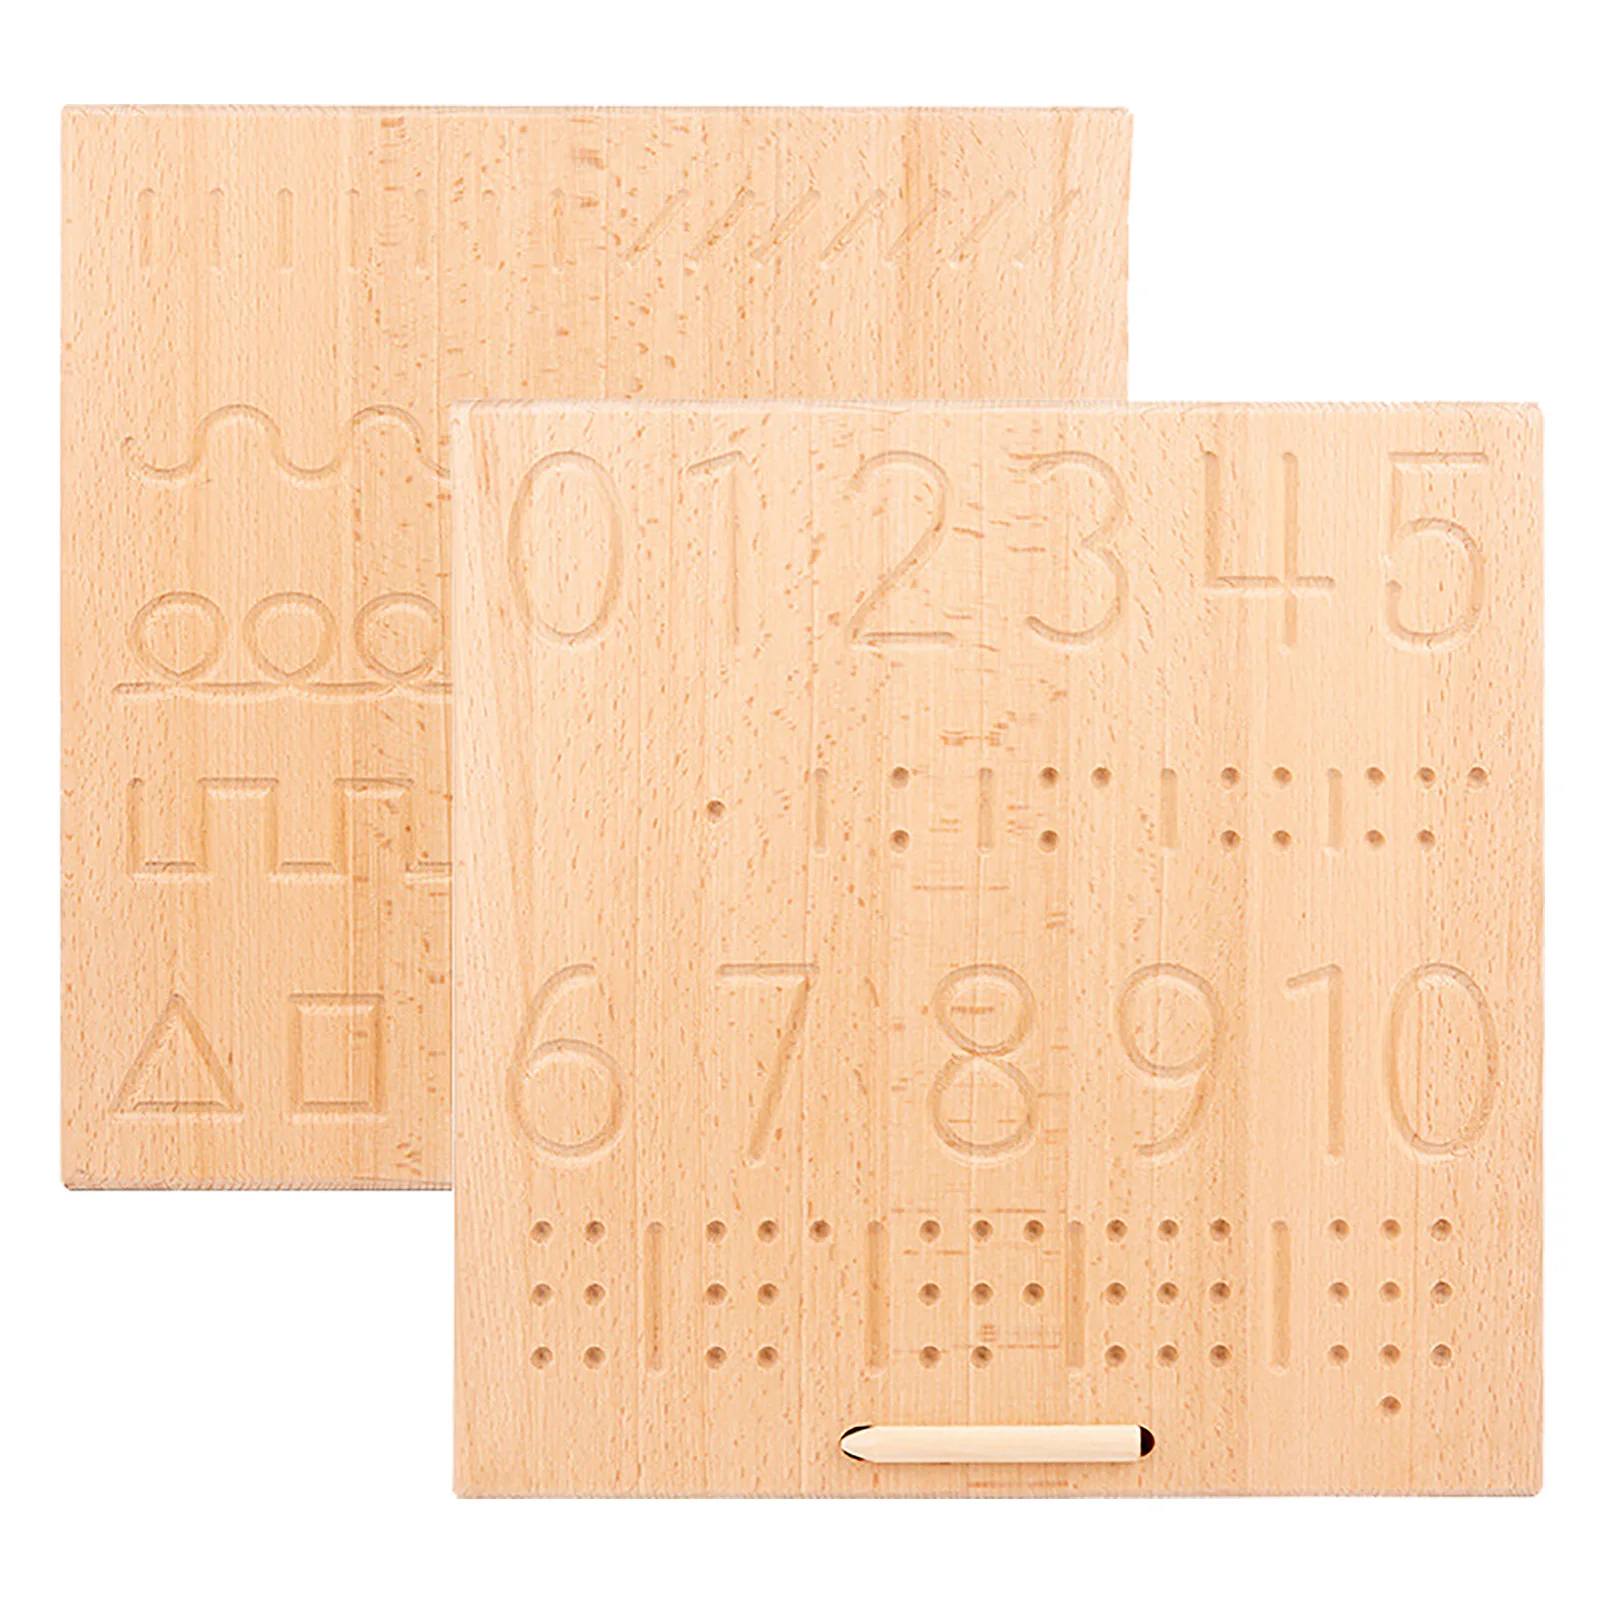 

Wooden Montessori Materials Digitals Cognition Board Montessori Math Writing Practice With Wooden Pen Toys For Children